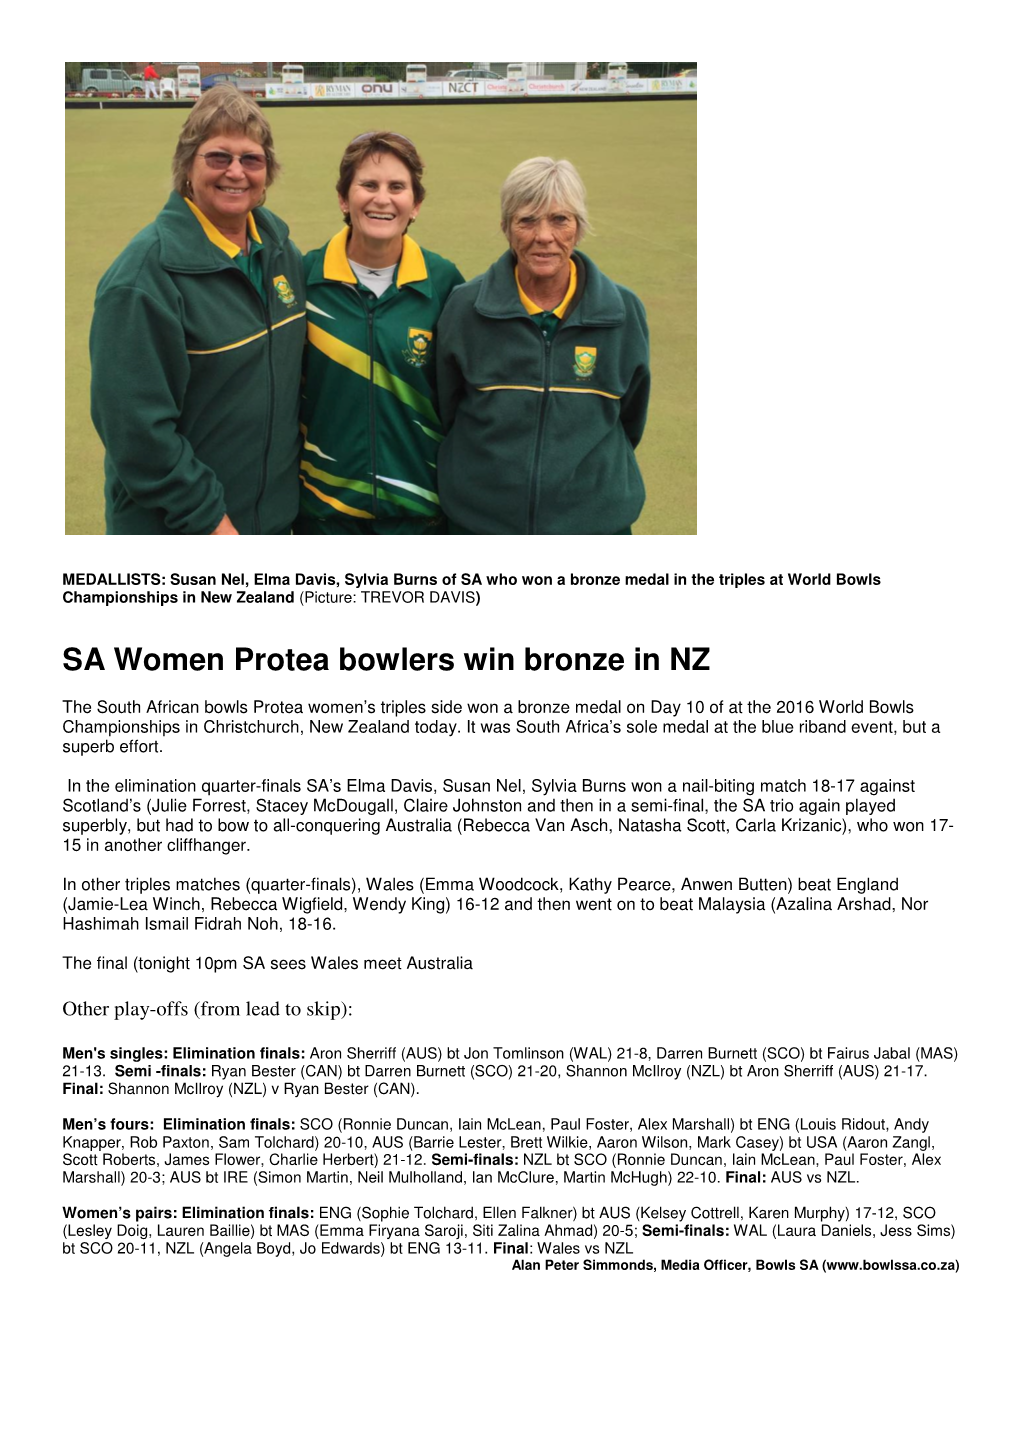 SA Women Protea Bowlers Win Bronze in NZ